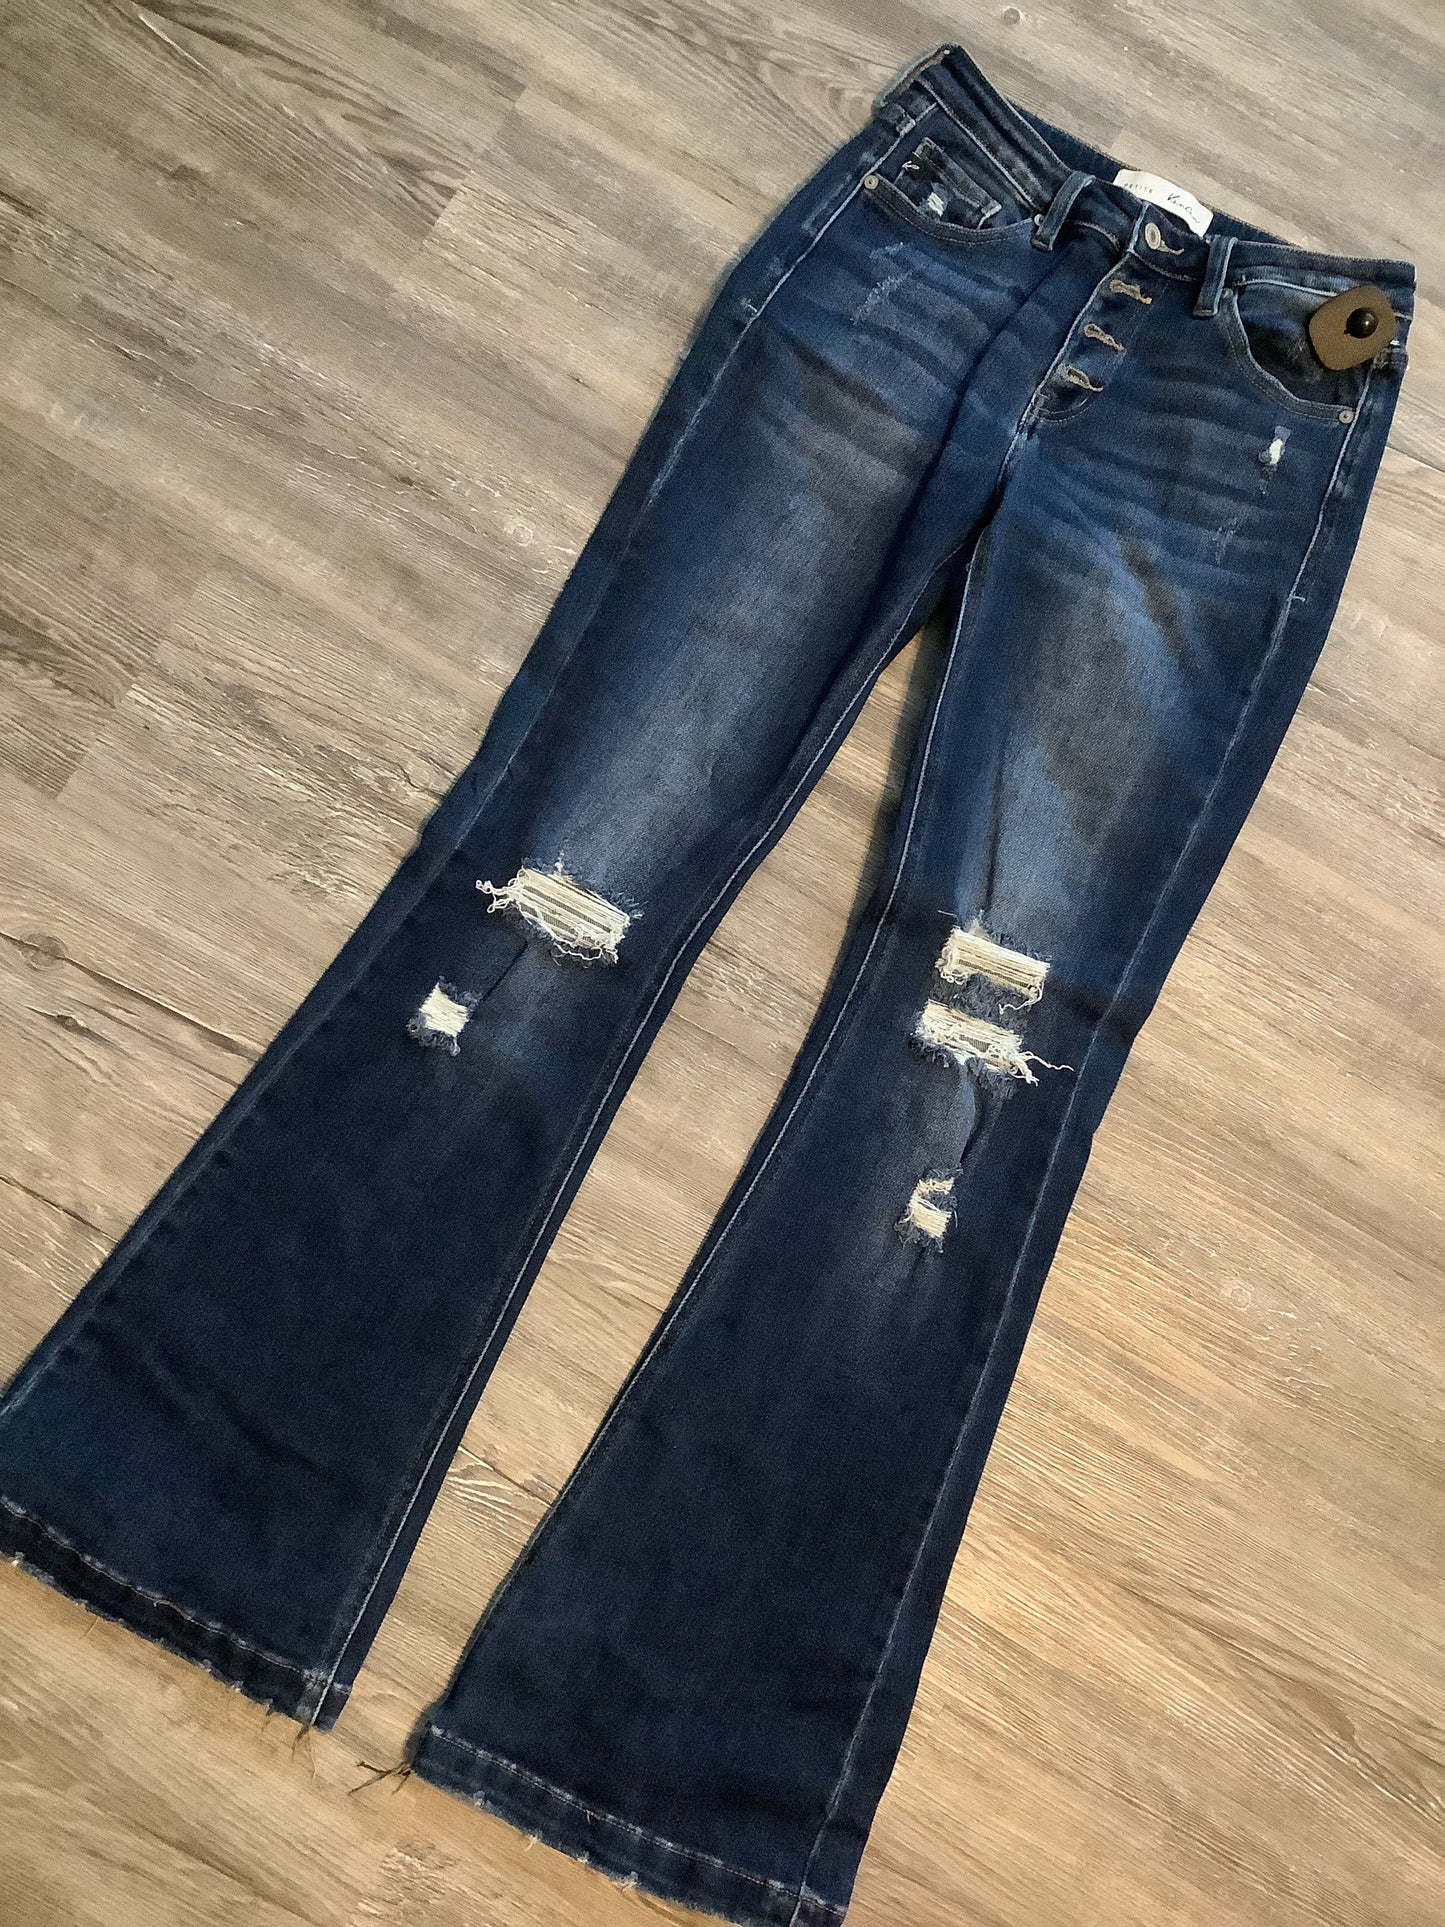 Blue Jeans Flared Kancan, Size 4